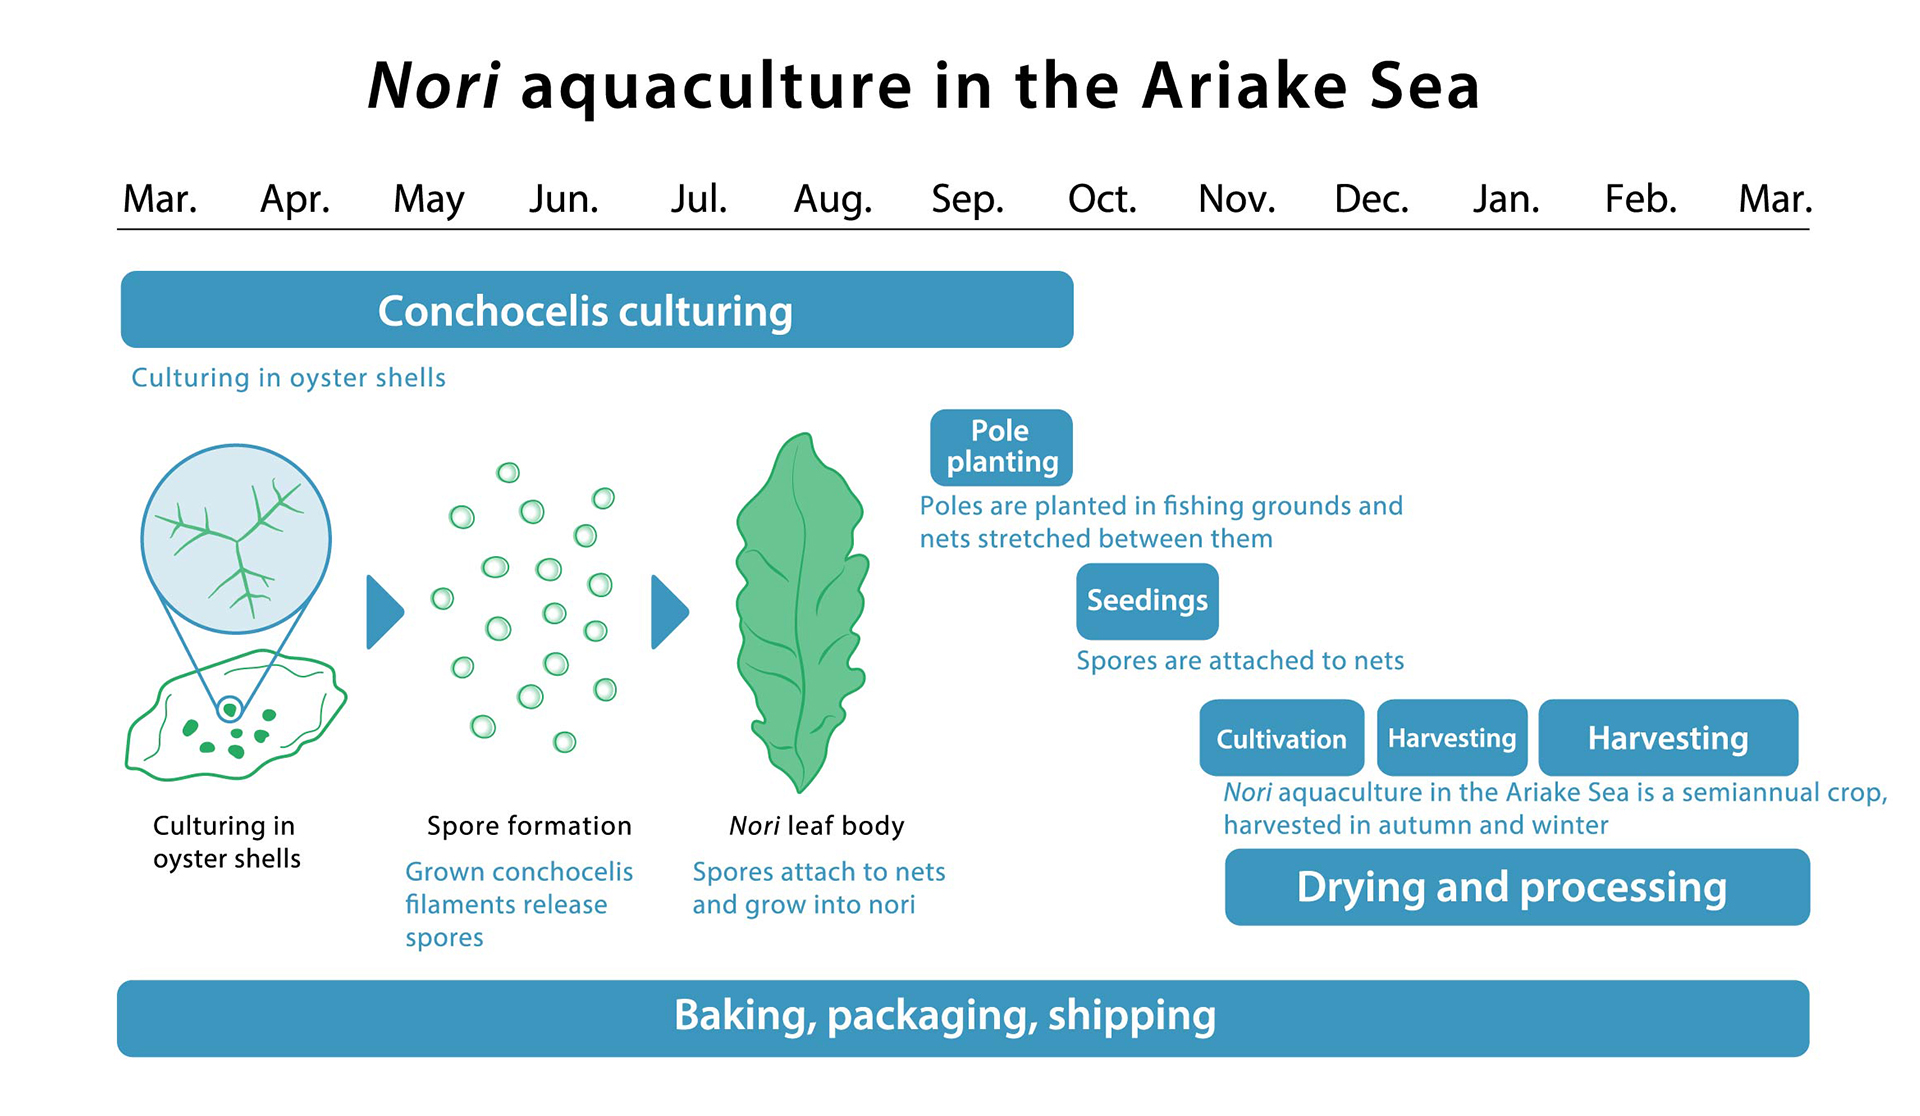 Nori aquaculture in the Ariake Sea